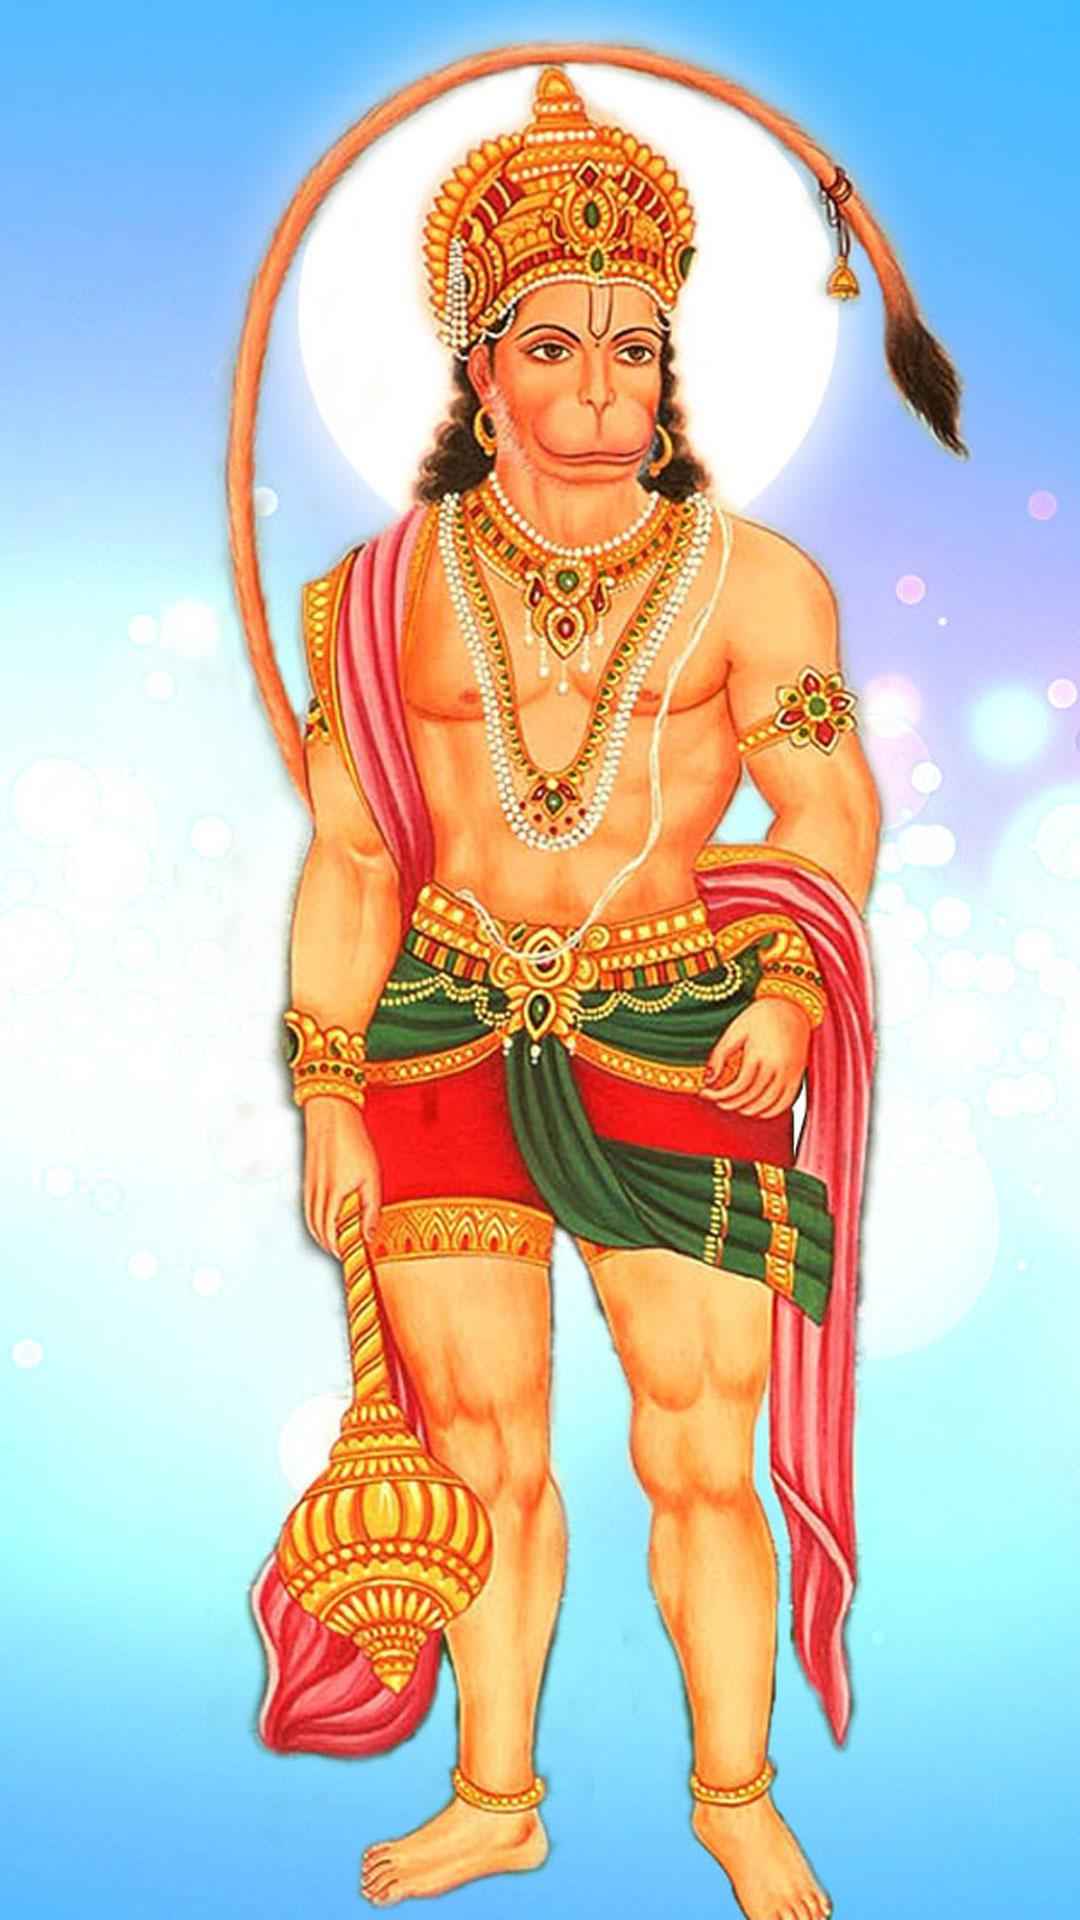 Hanuman Live Wallpaper APK for Android Download